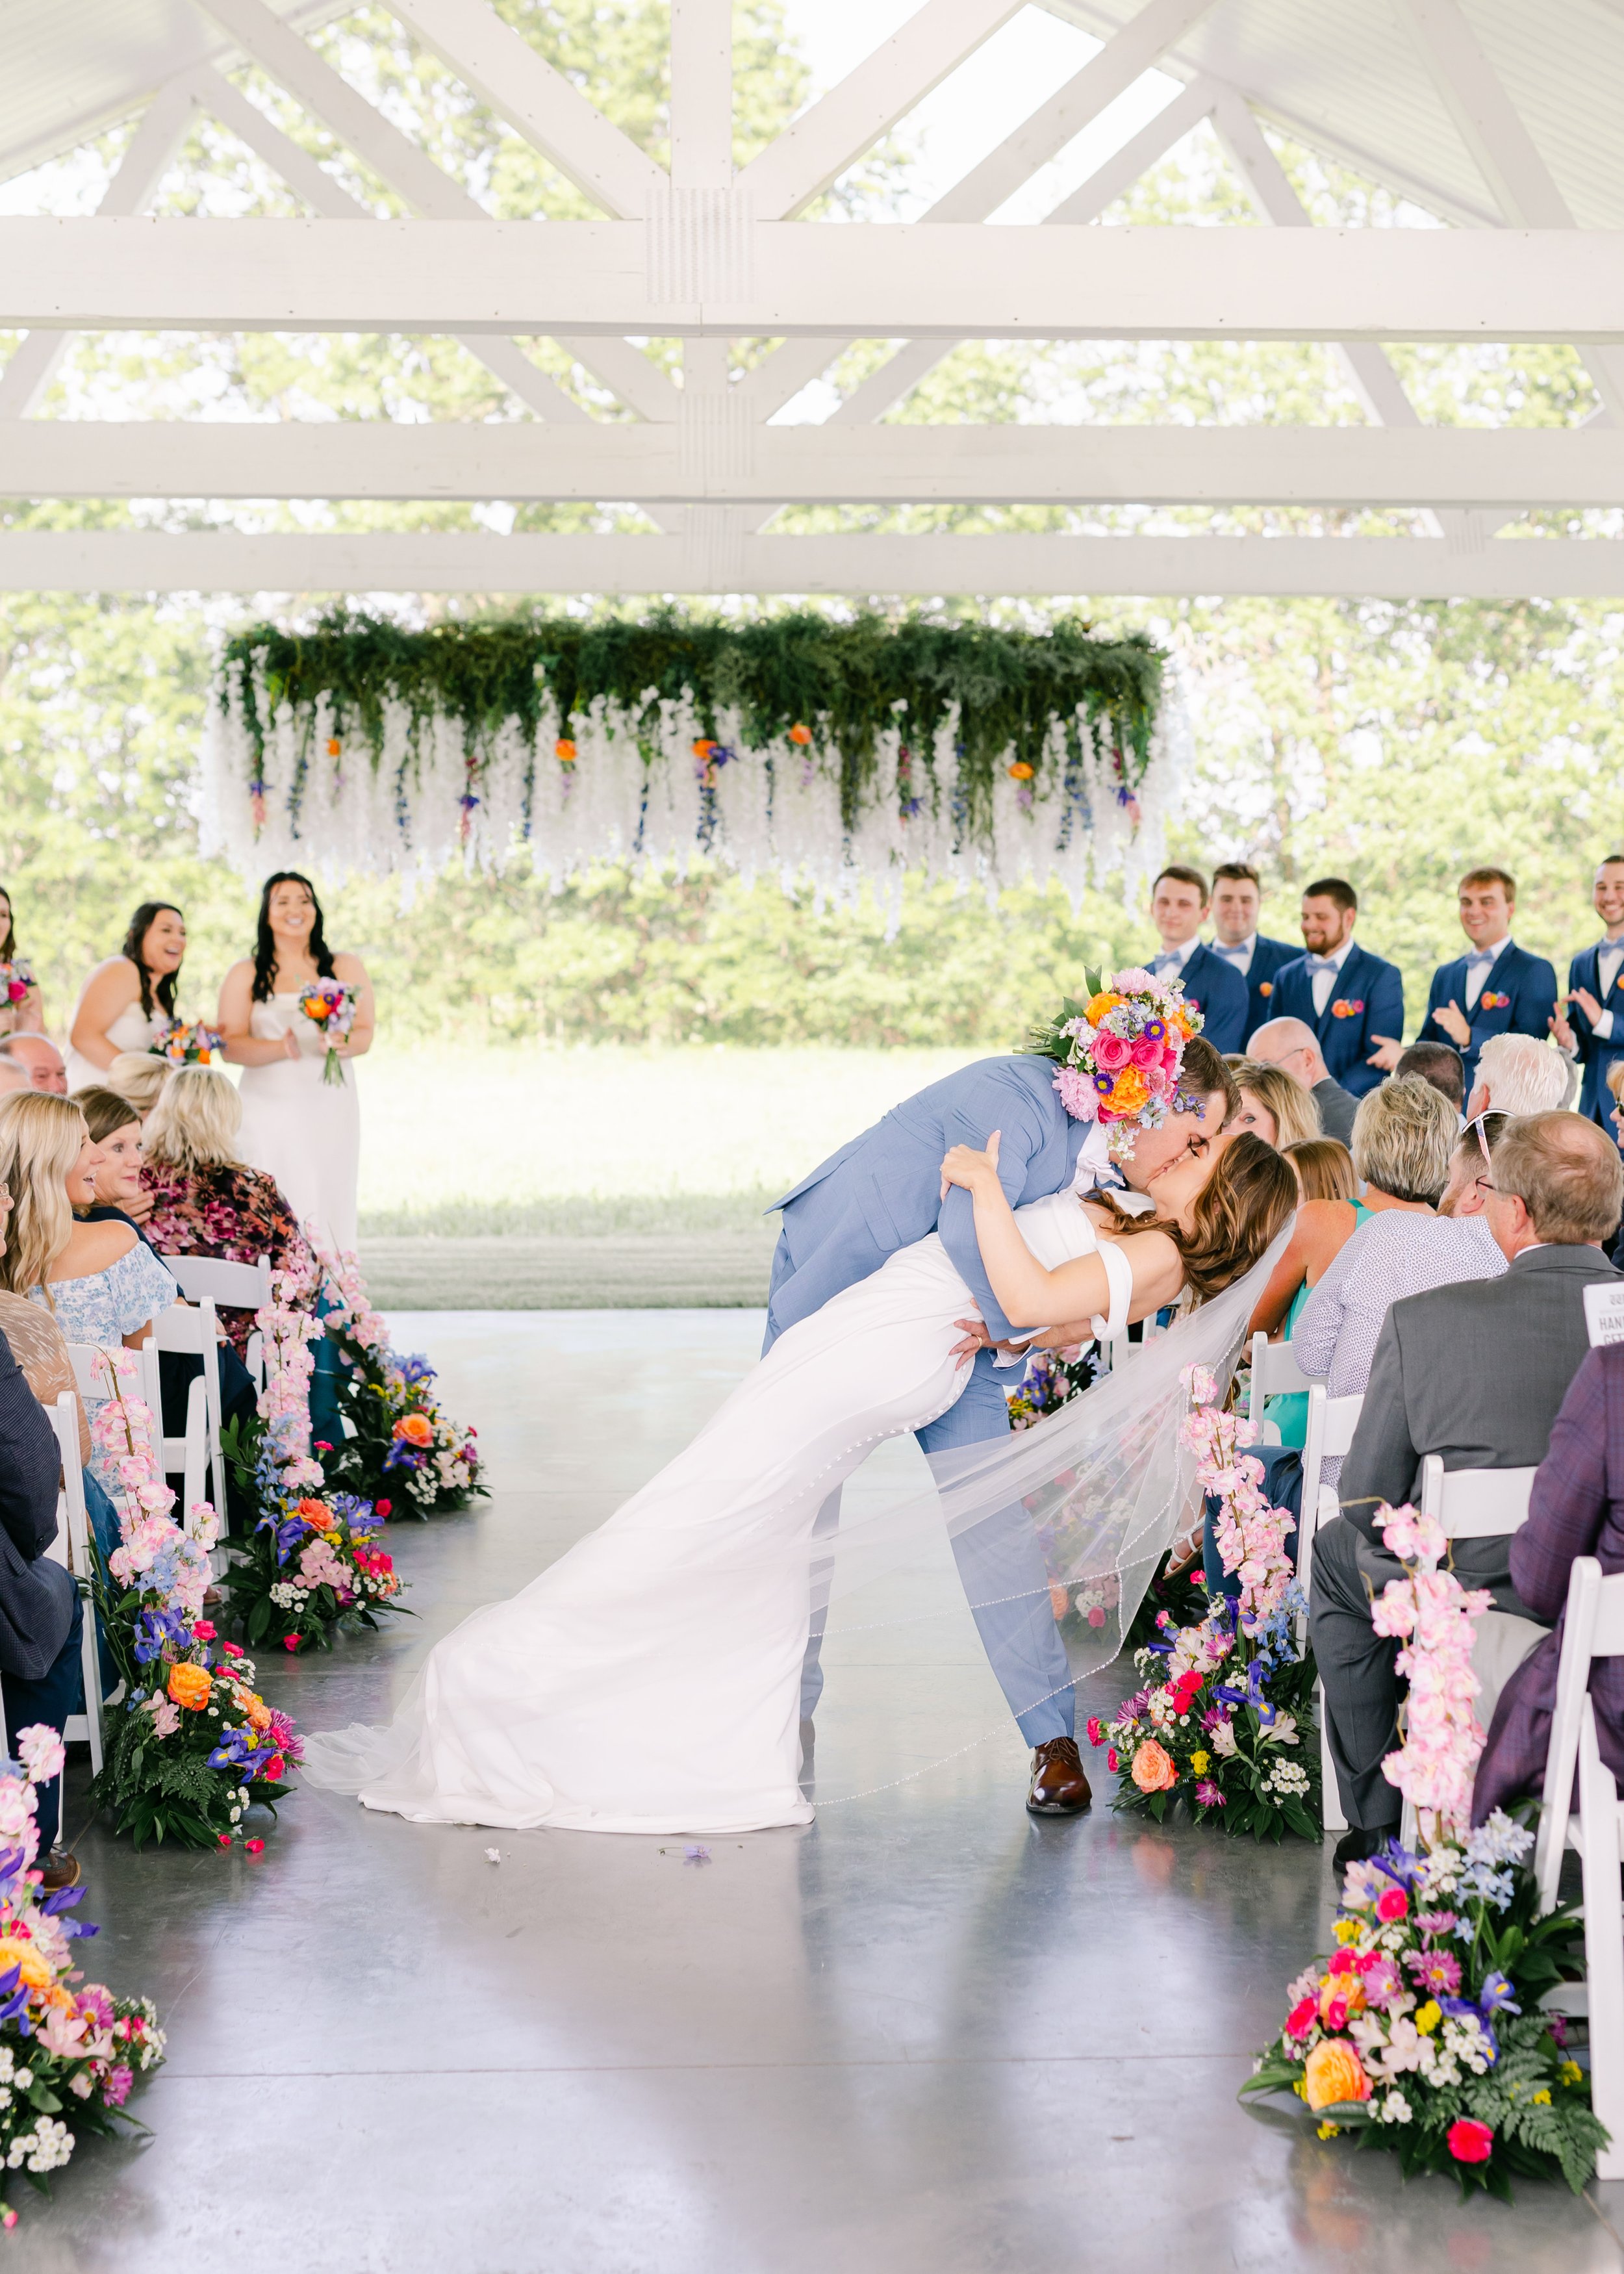 Outdoor-Spring-Wedding-Kissing-the-Bride-at-Missouri-Destination-Wedding-Venue.jpg